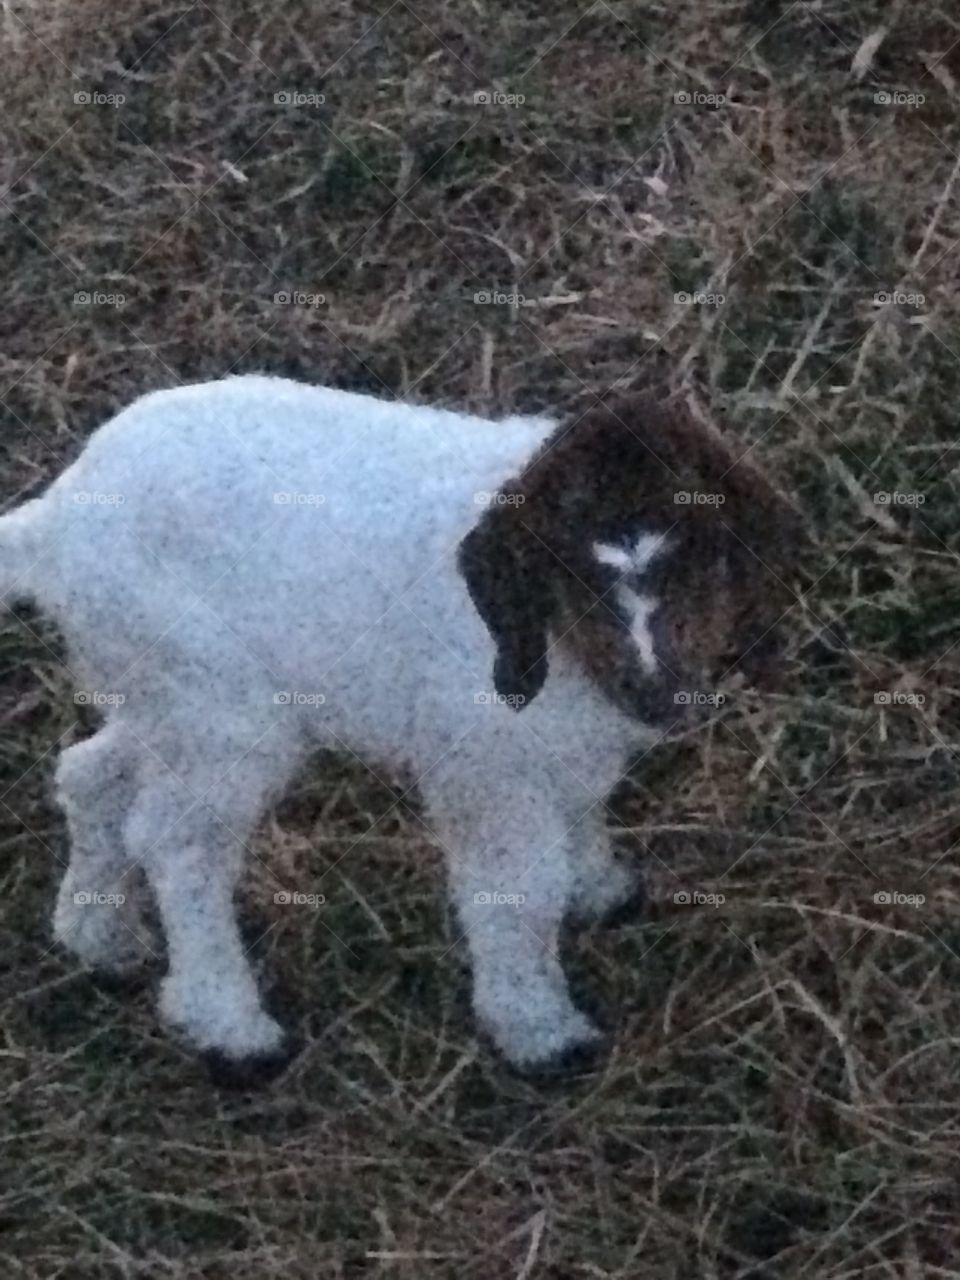 Goat
Baby goat
Farm
White